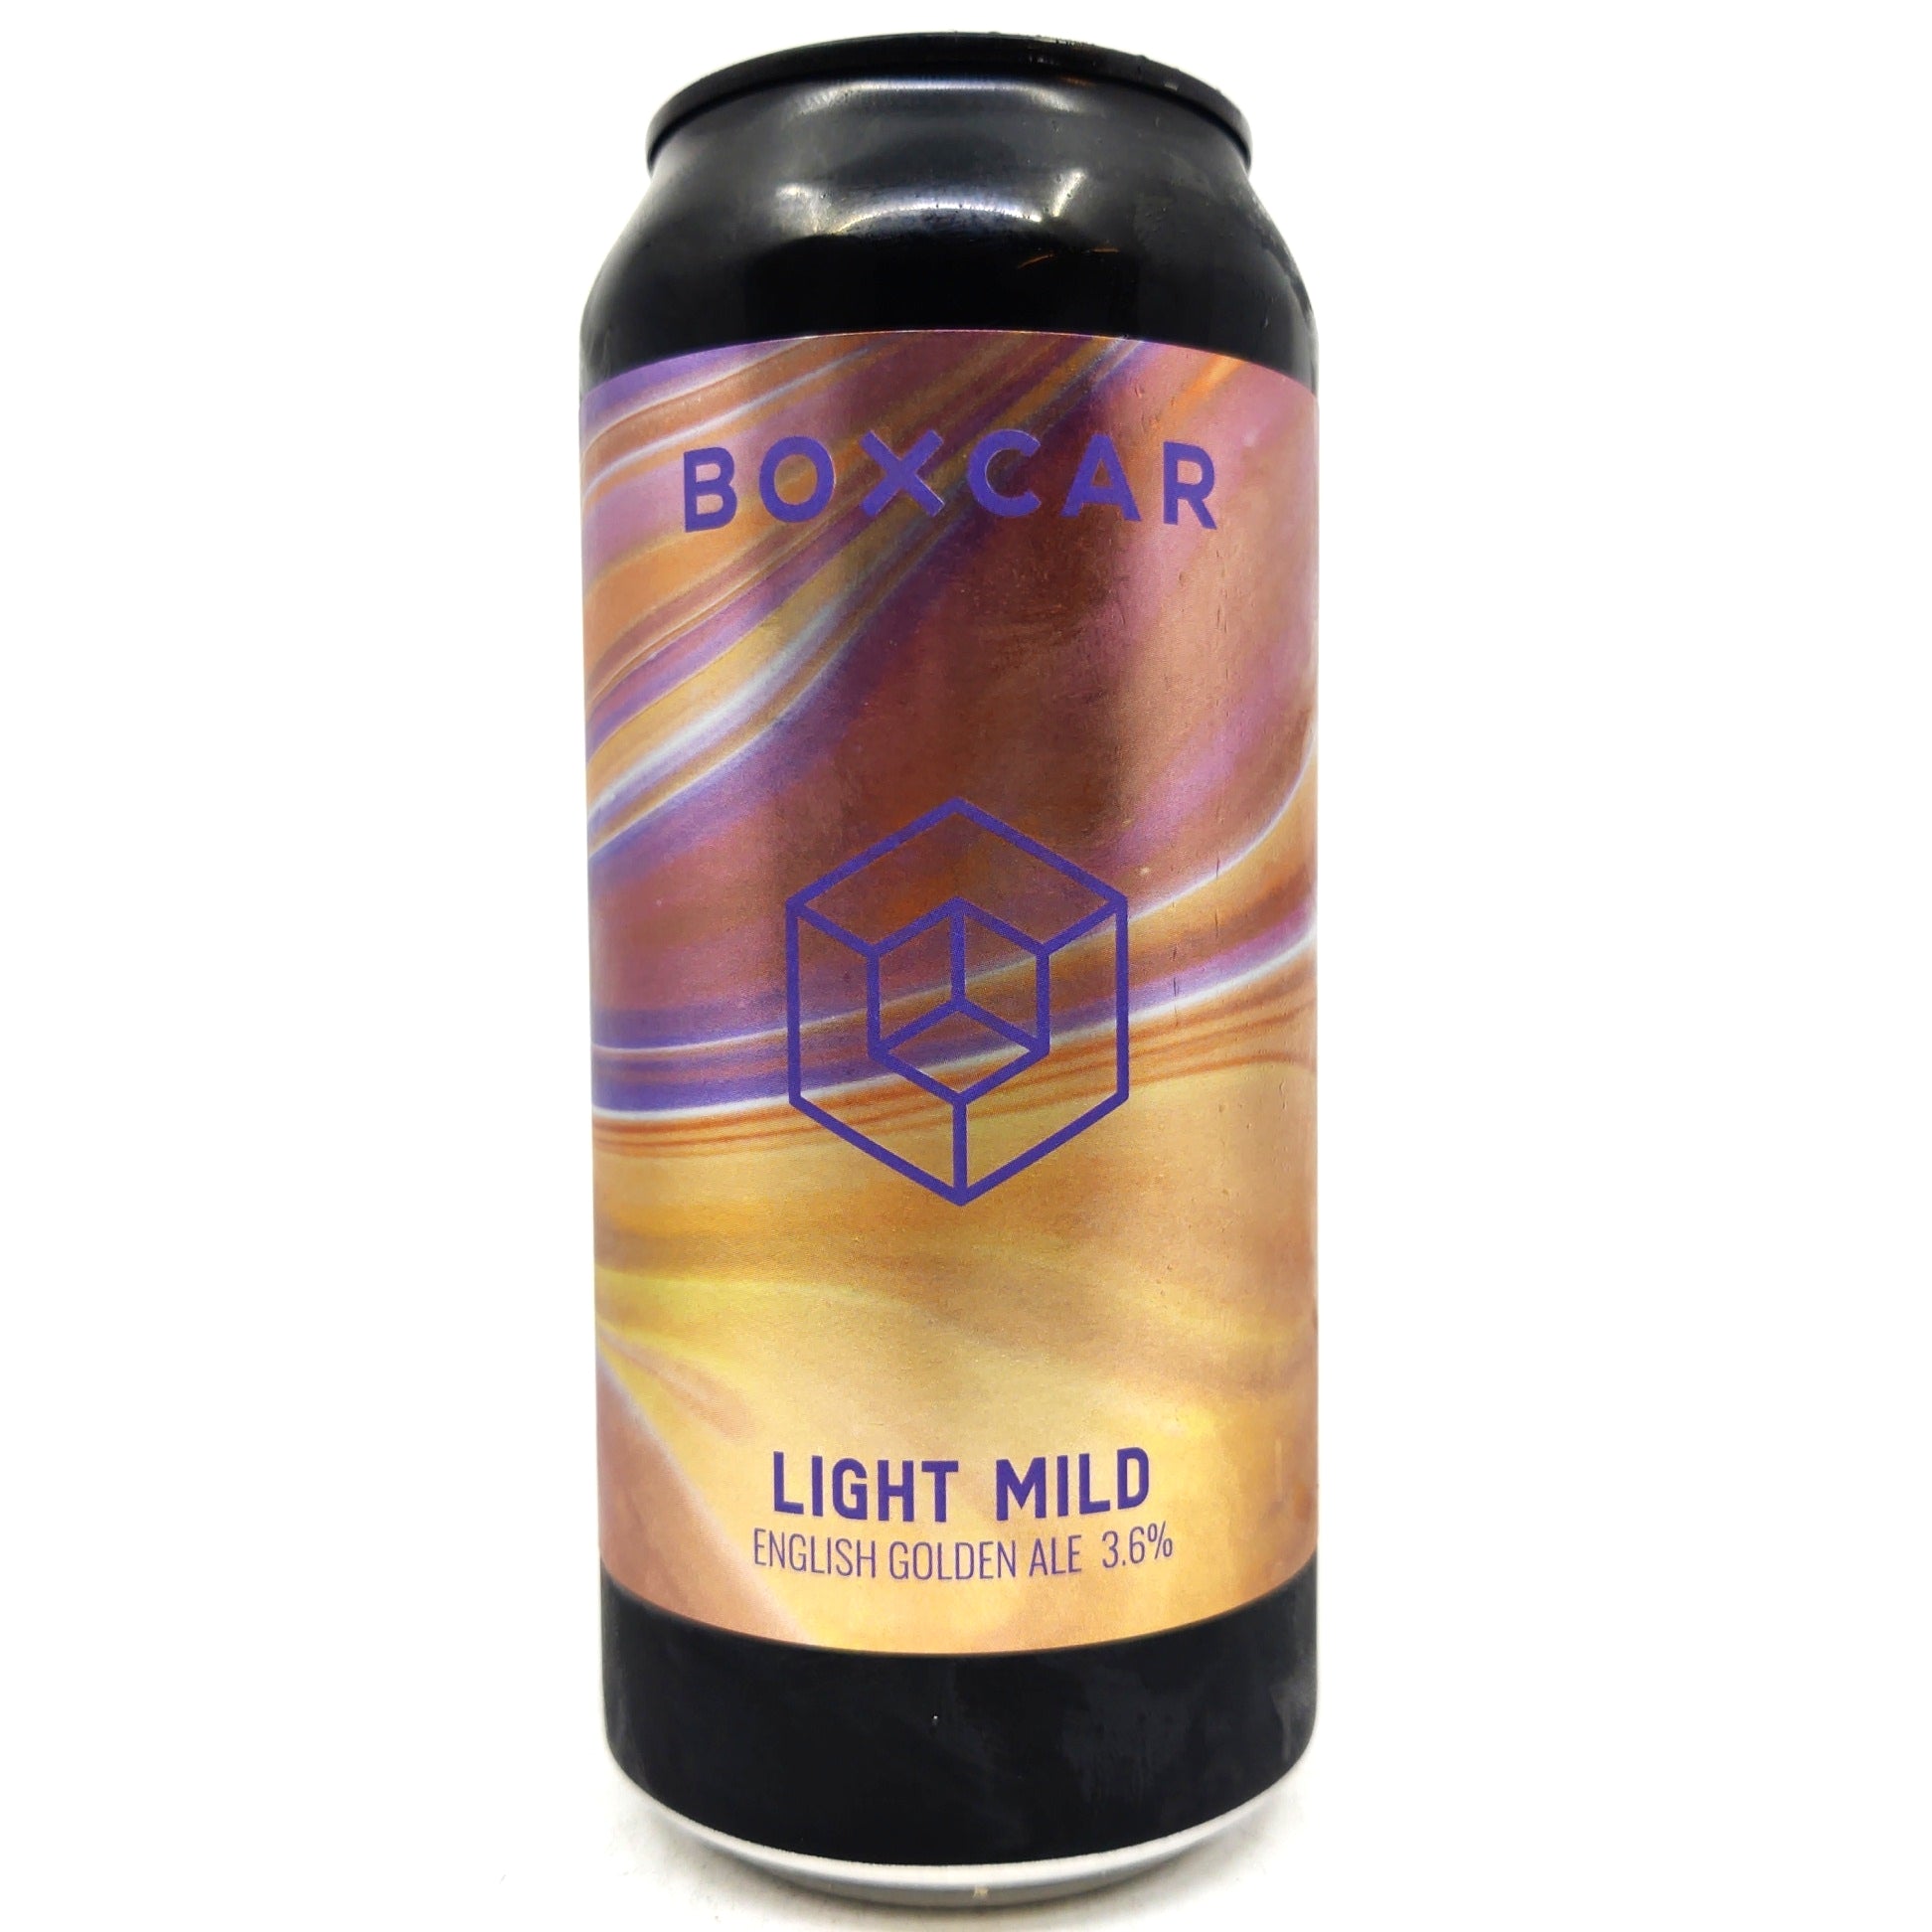 Boxcar Light Mild English Golden Ale 3.6% (440ml can)-Hop Burns & Black